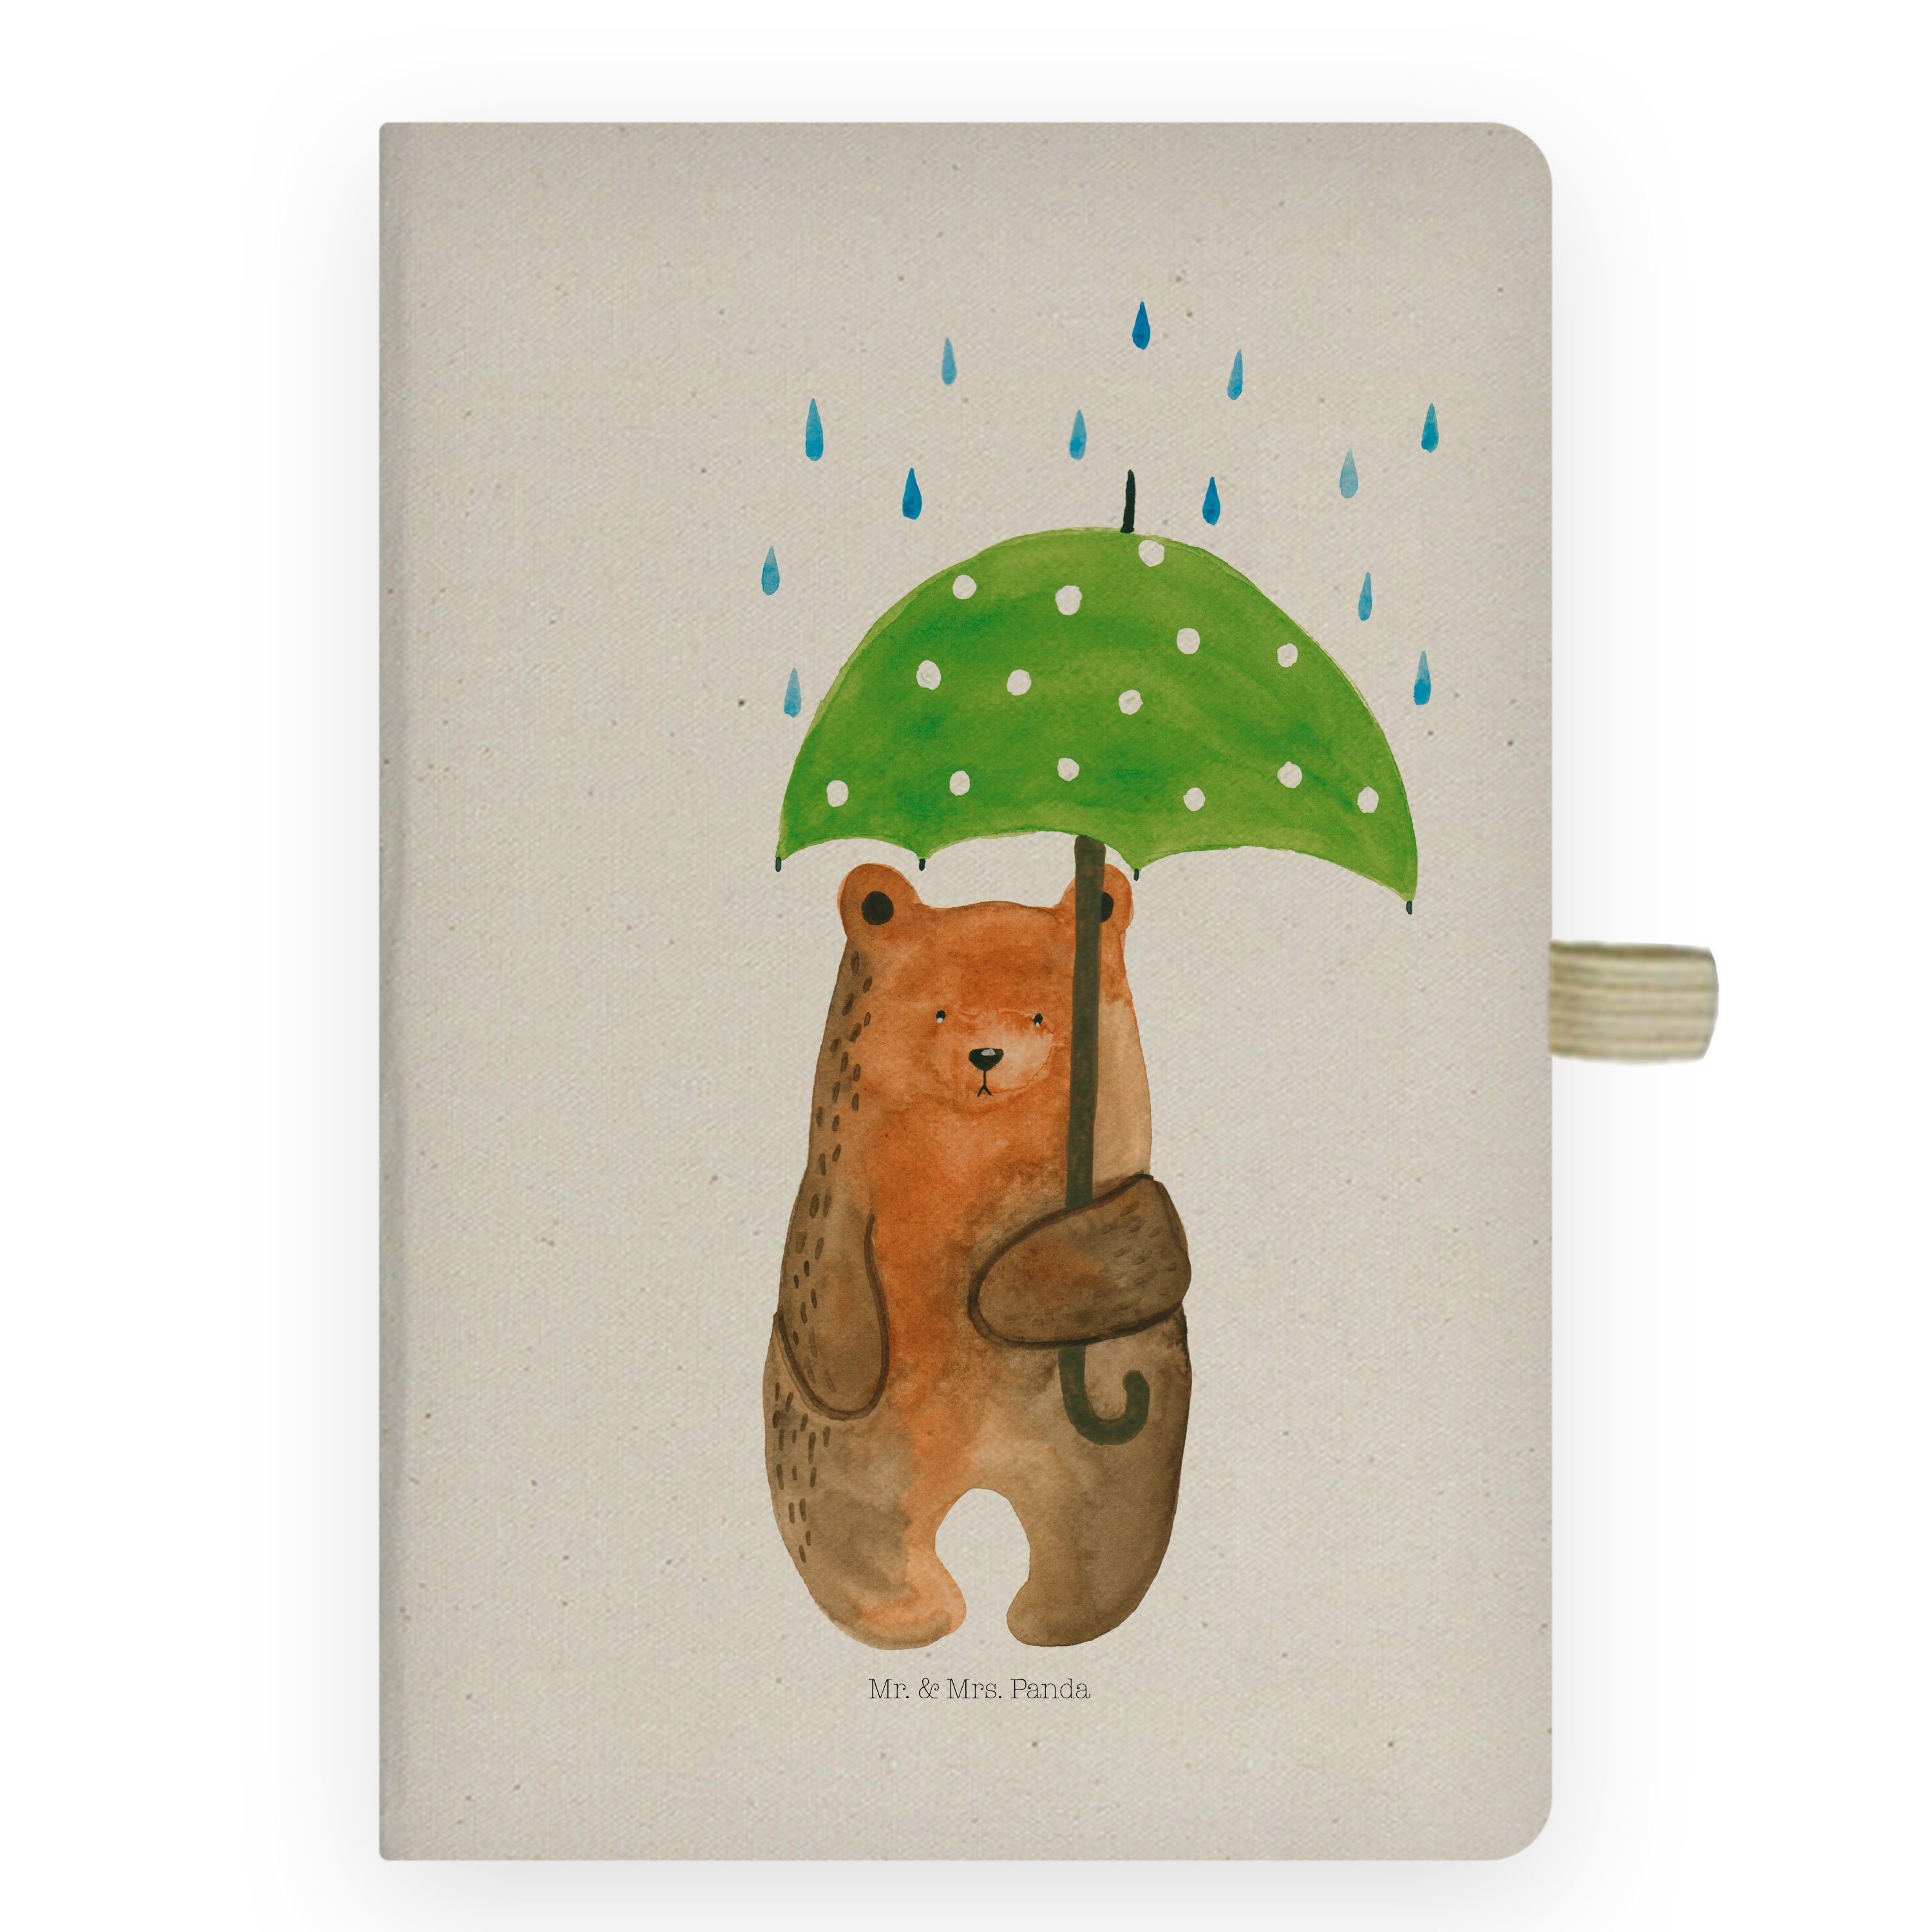 Mr. & Mrs. Panda Notizbuch Bär mit Regenschirm - Transparent - Geschenk, Liebe, Liebesbeweis, No Mr. & Mrs. Panda